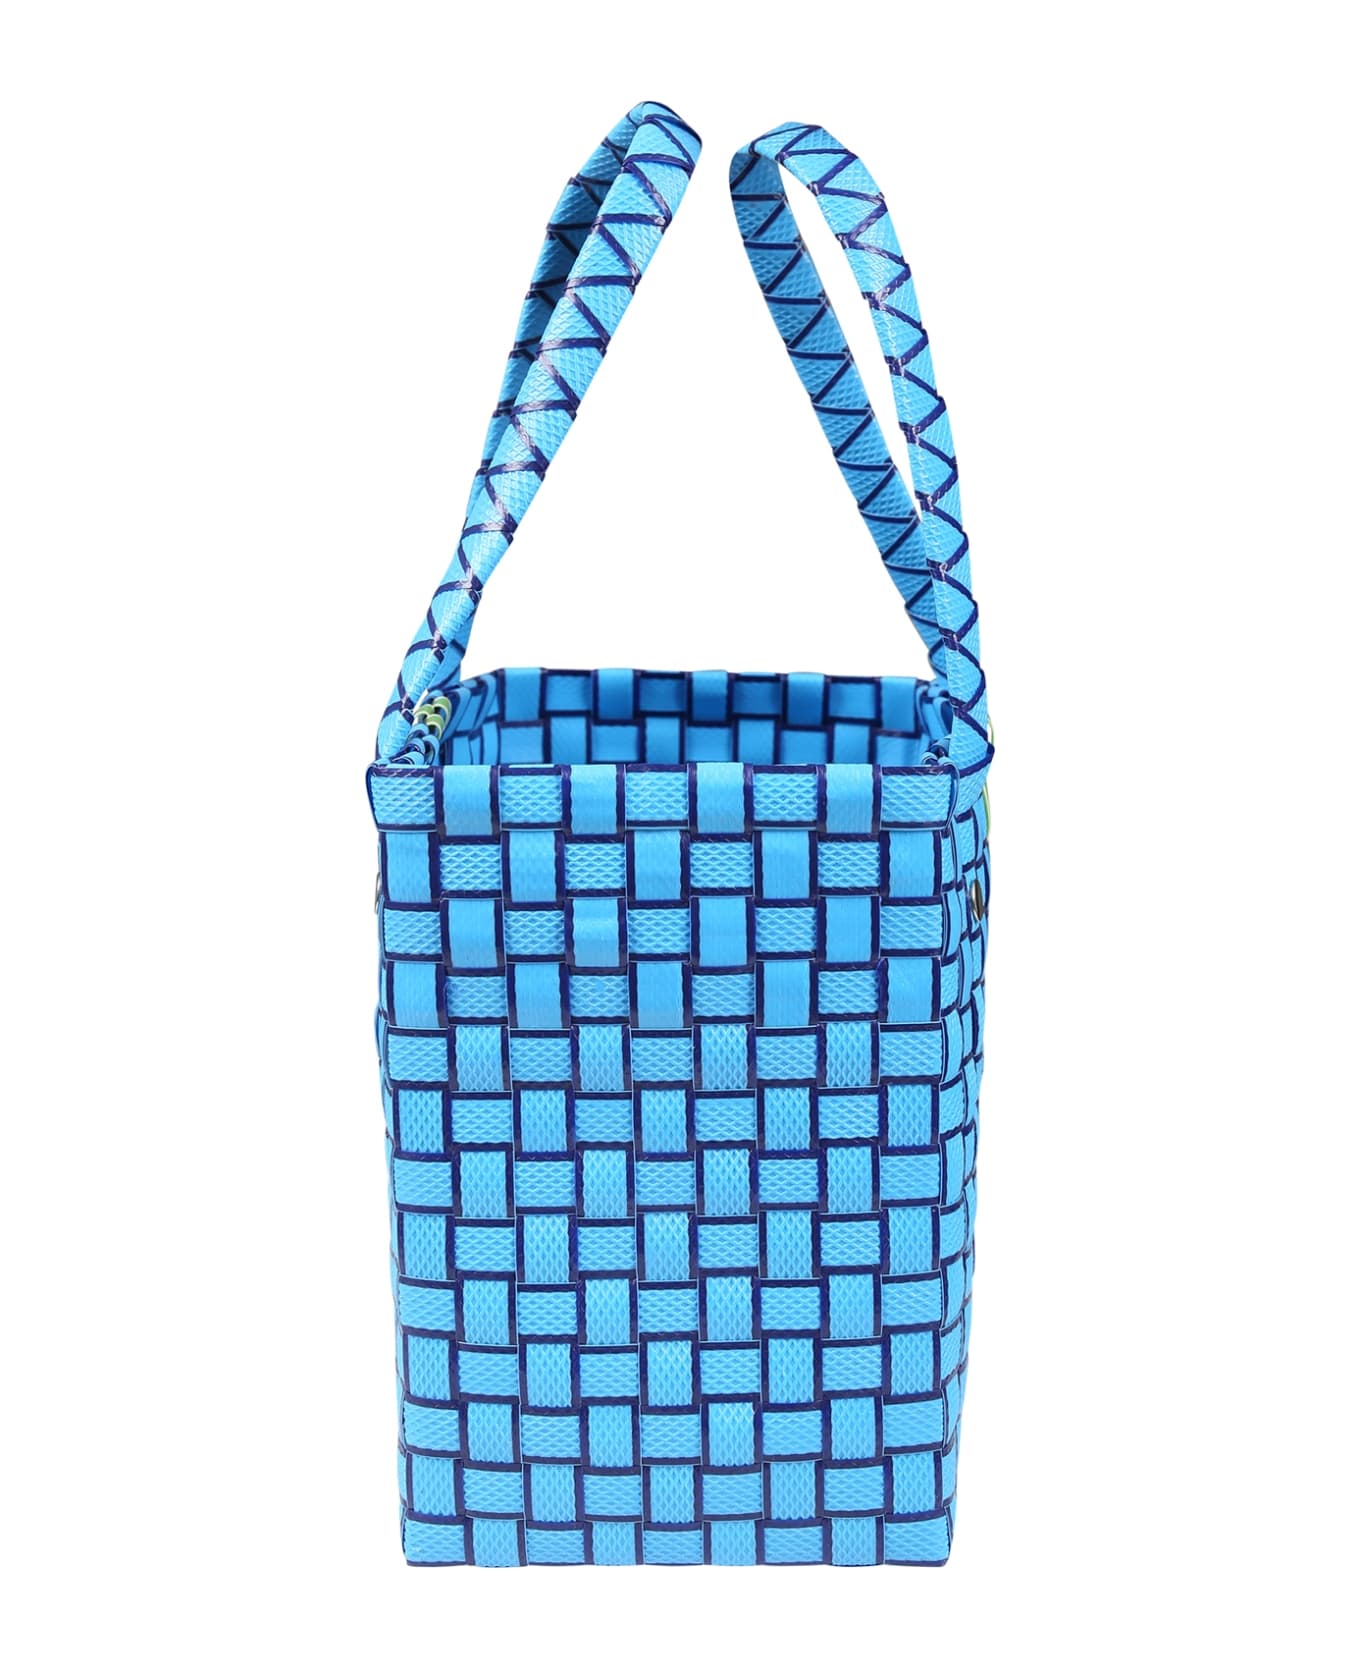 Marni Light Blue Bag For Girl With Knitted - Light Blue